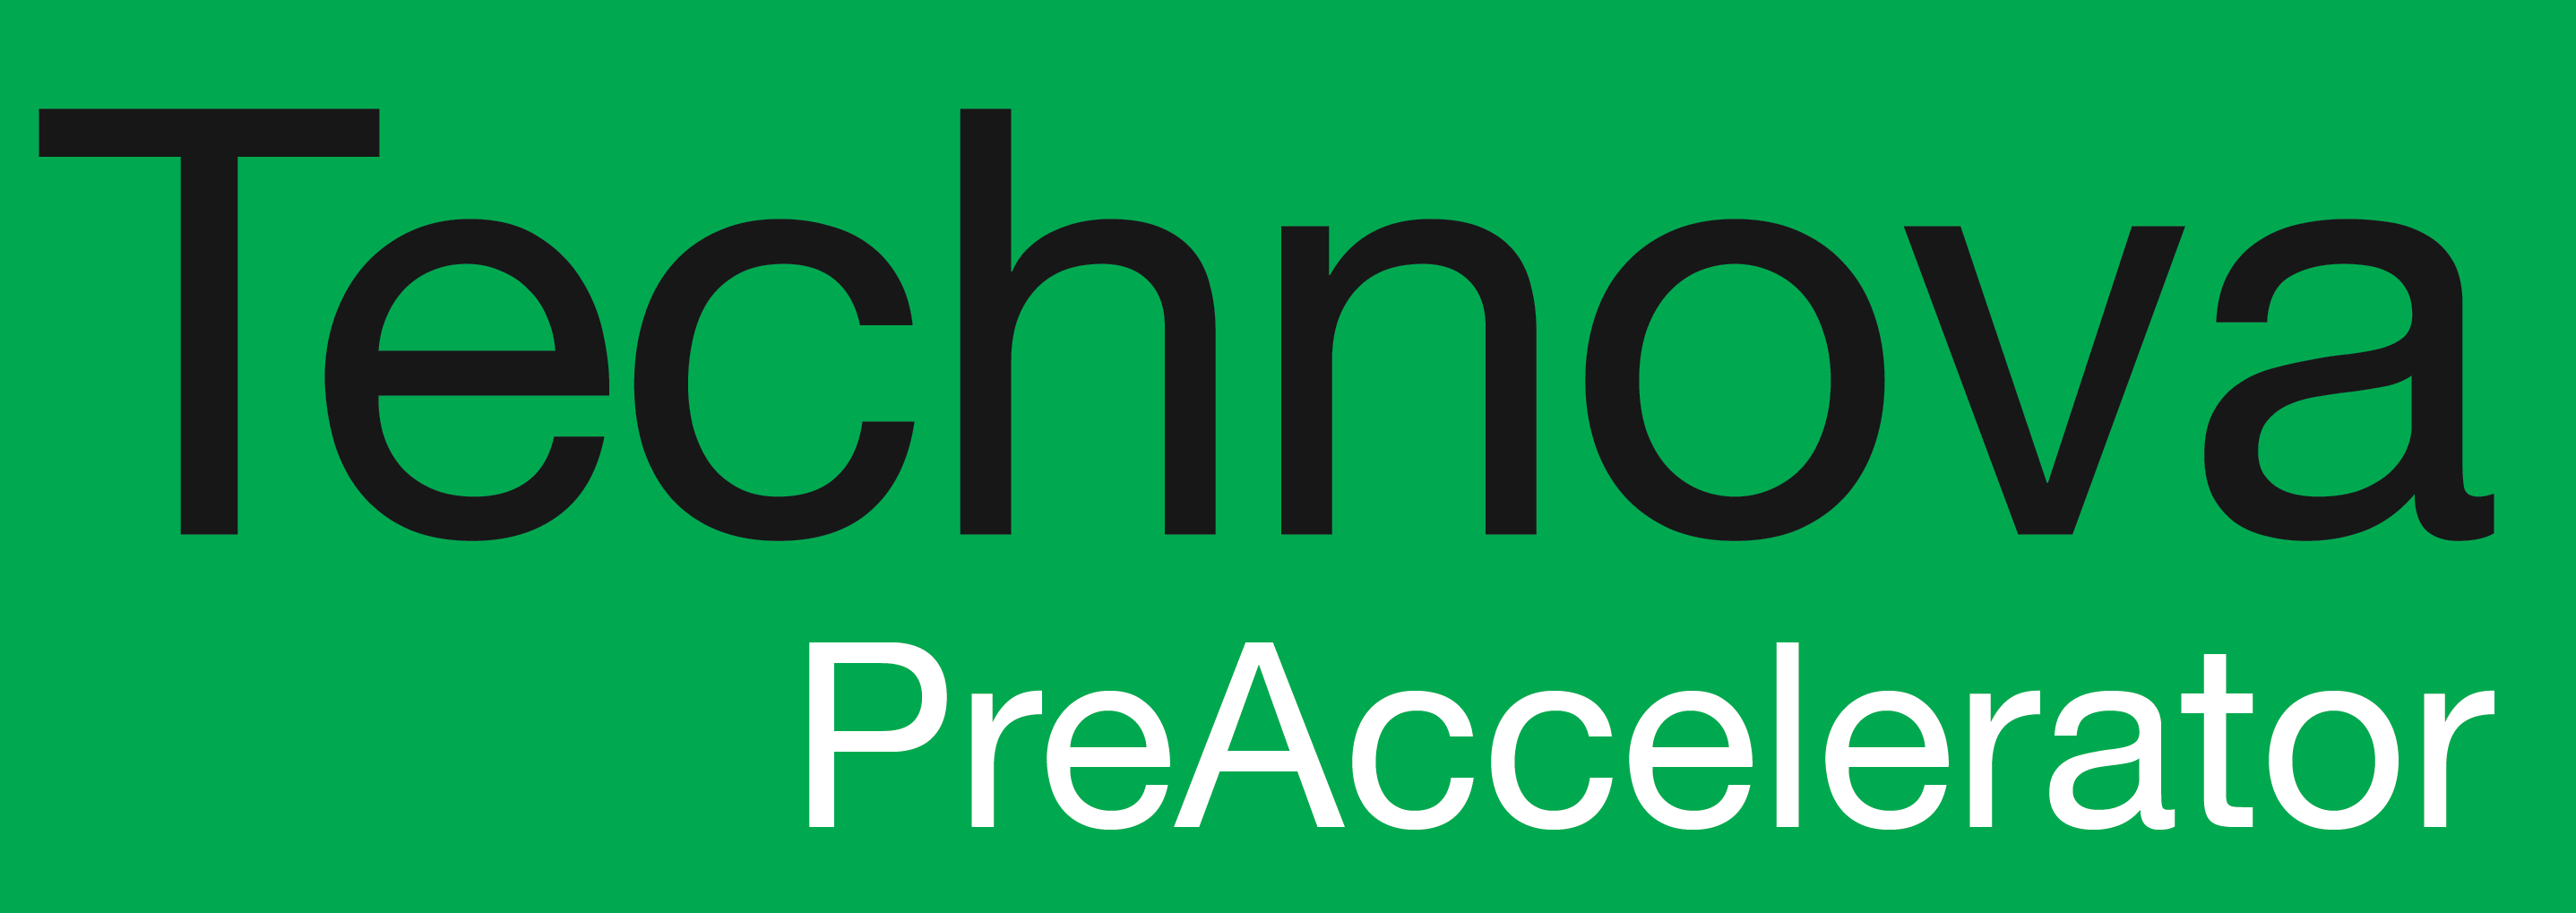 technova-preaccelerator-programa-aceleracion-startups-sector-tic